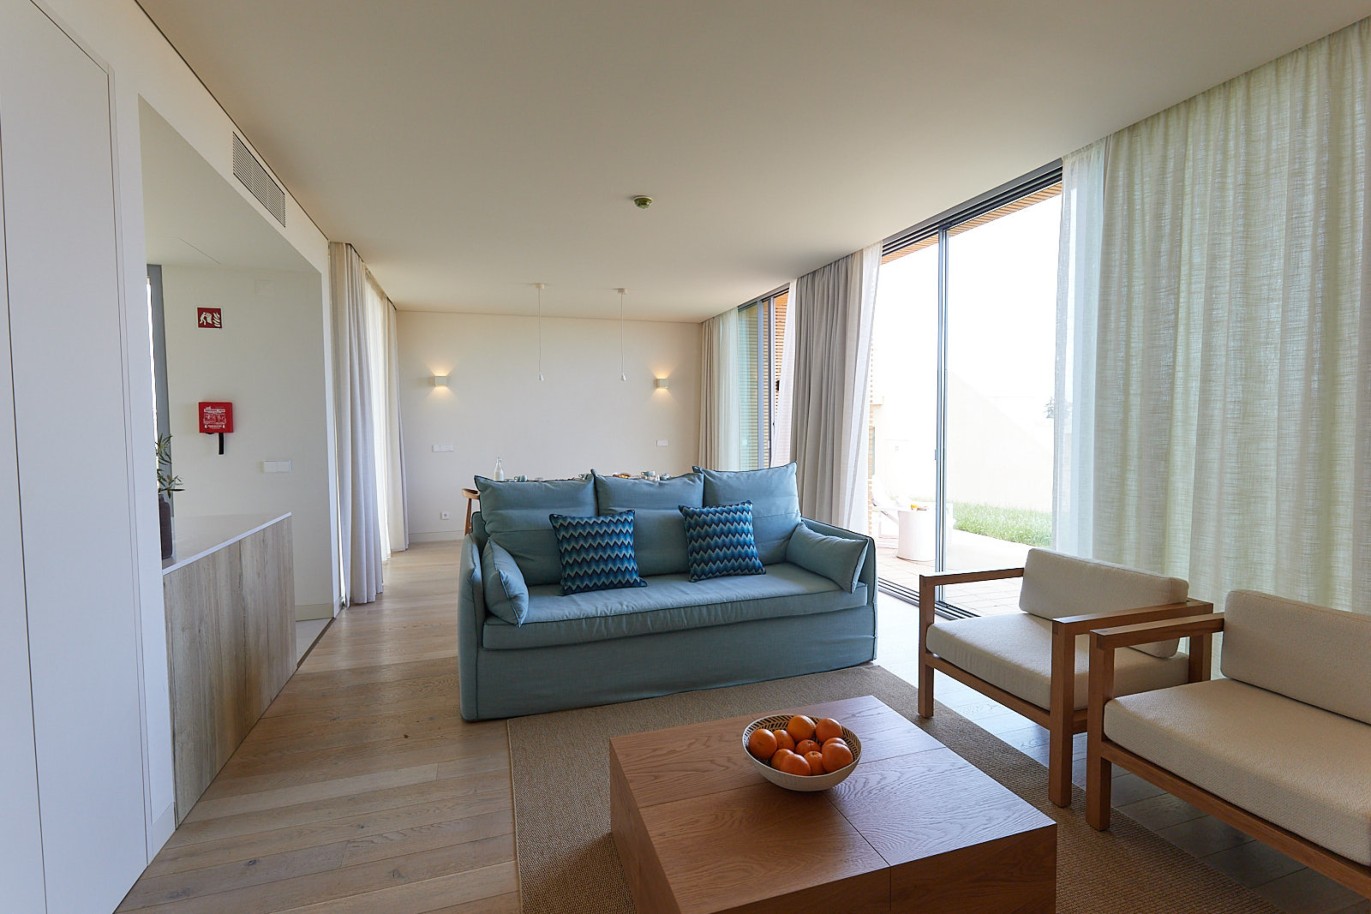 2 bedroom apartment in resort, for sale in Porches, Algarve_228802